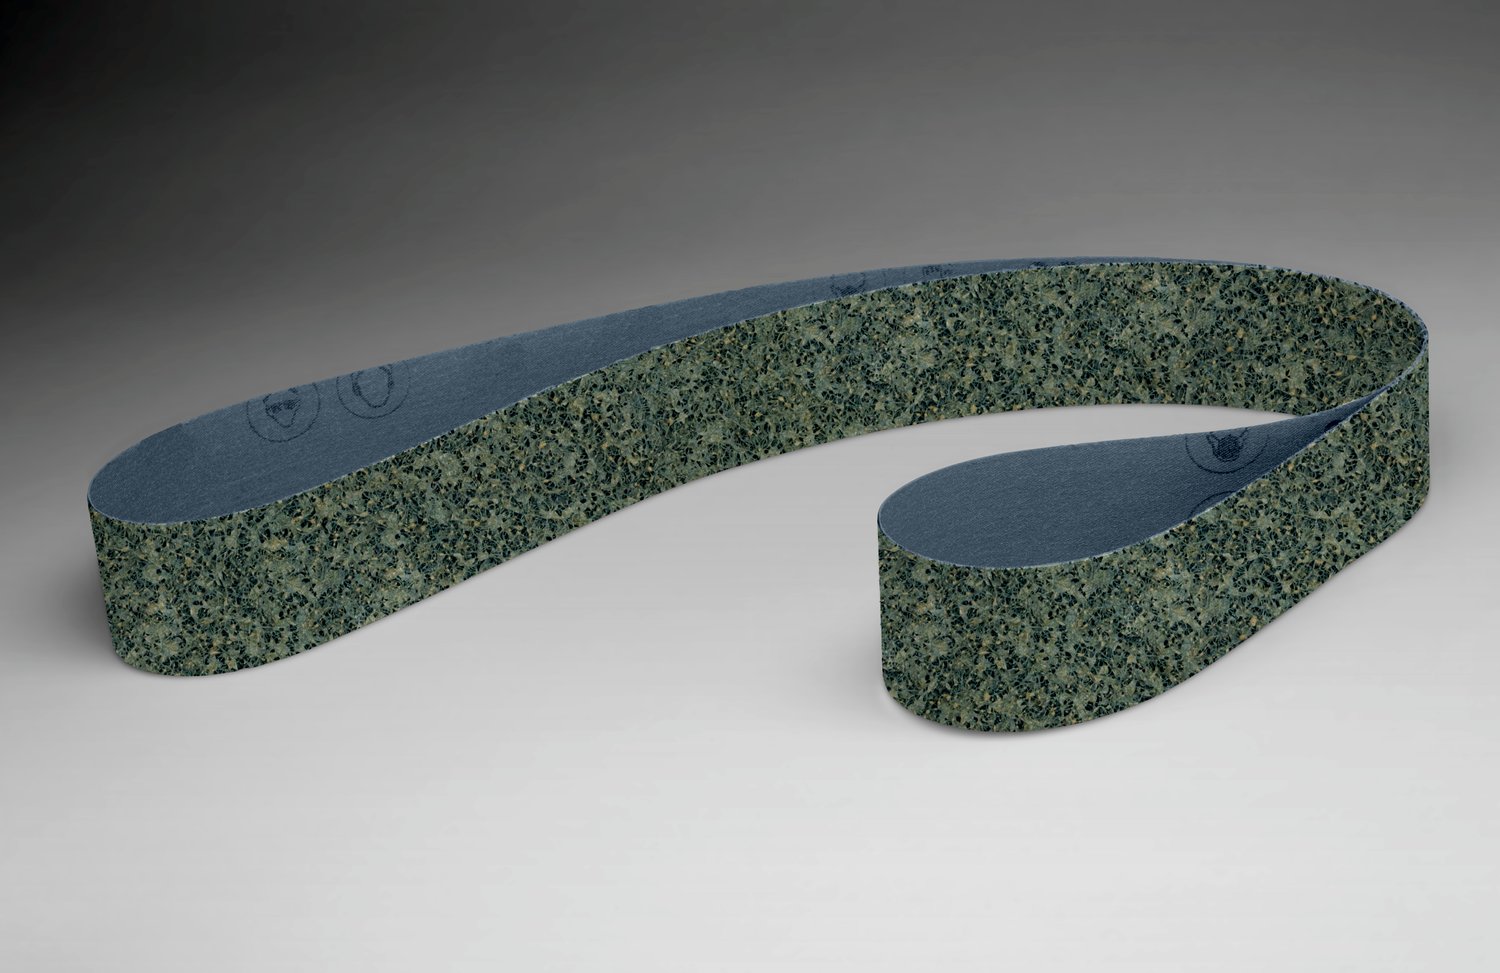 Concrete Pin Carpet Gripper 1.52m (Box of 100)